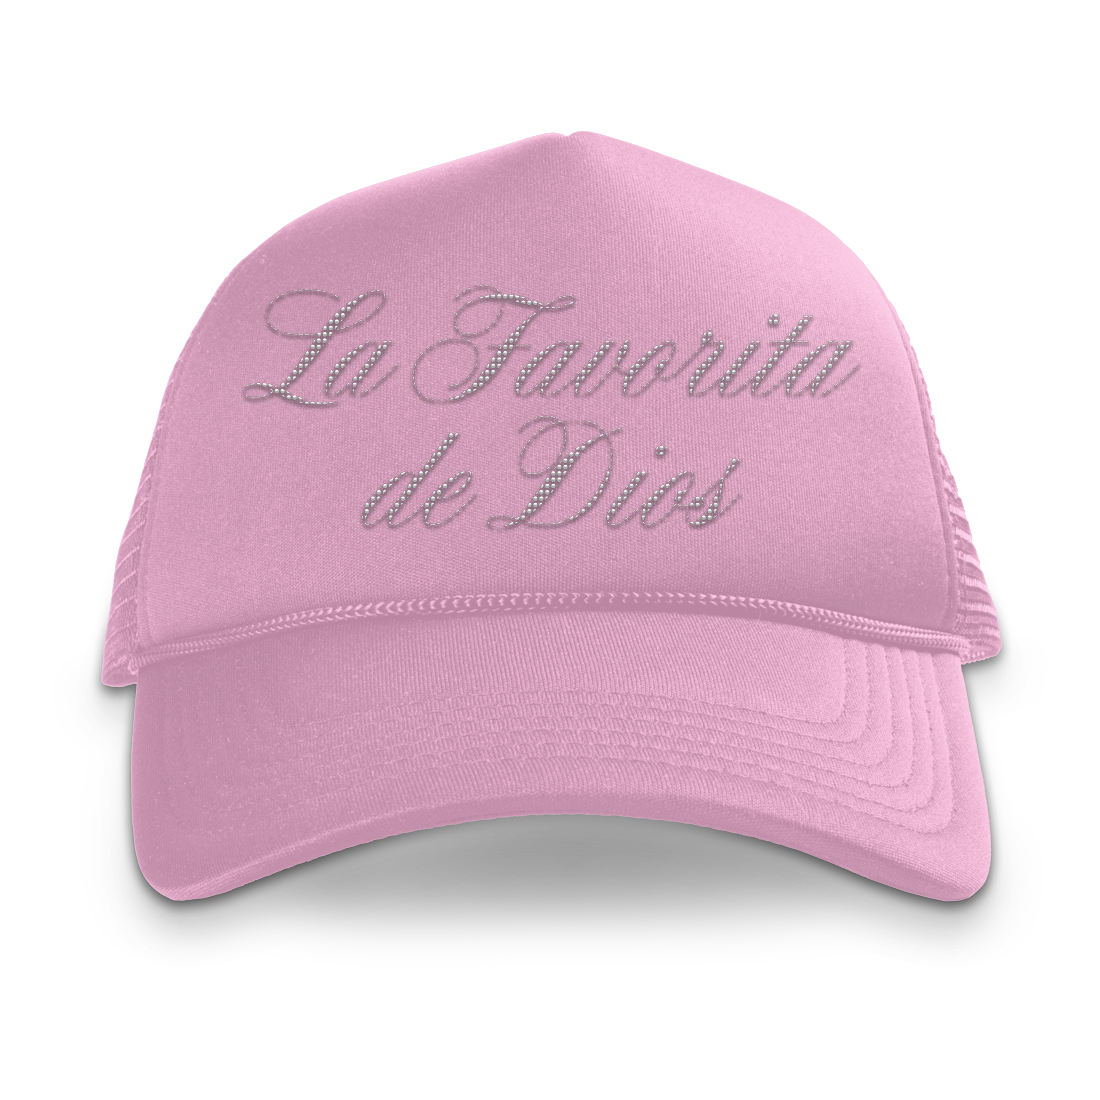 Kali Uchis - La Favorita De Dios Rhinestone Trucker Hat